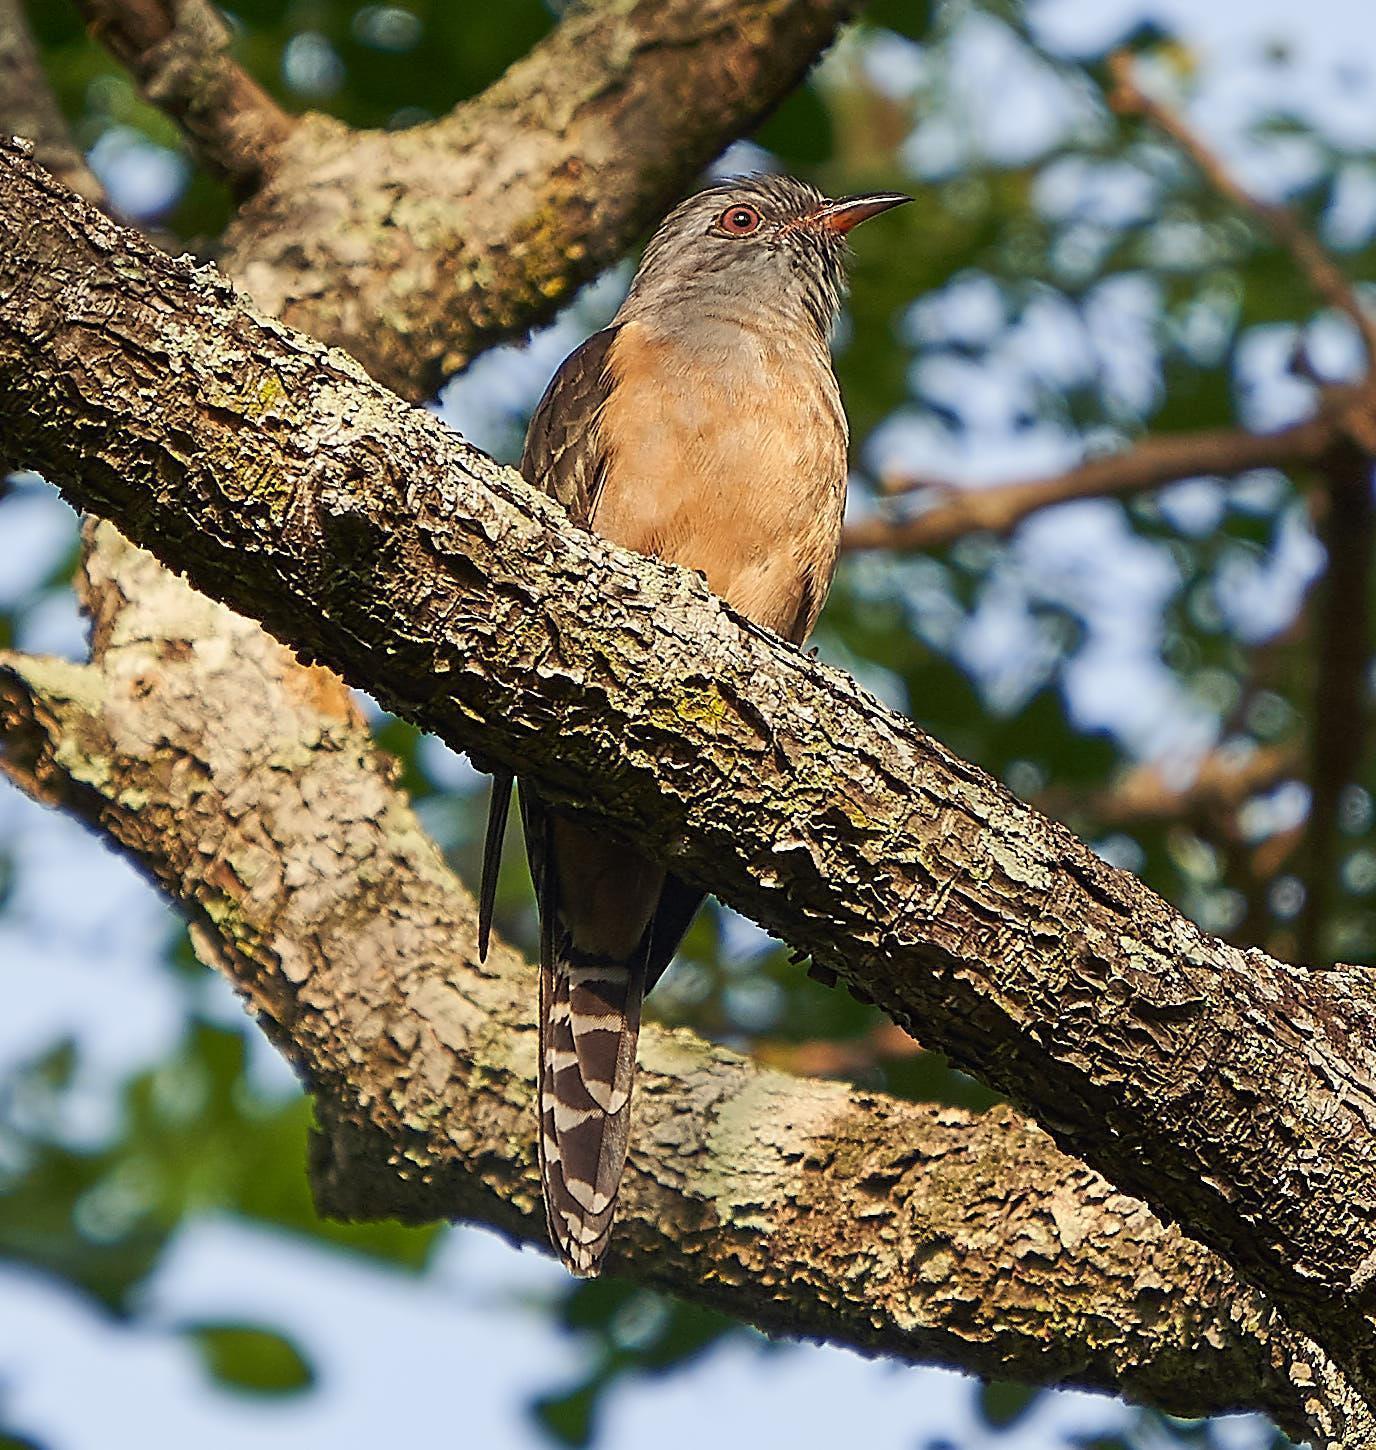 Plaintive Cuckoo Photo by Steven Cheong